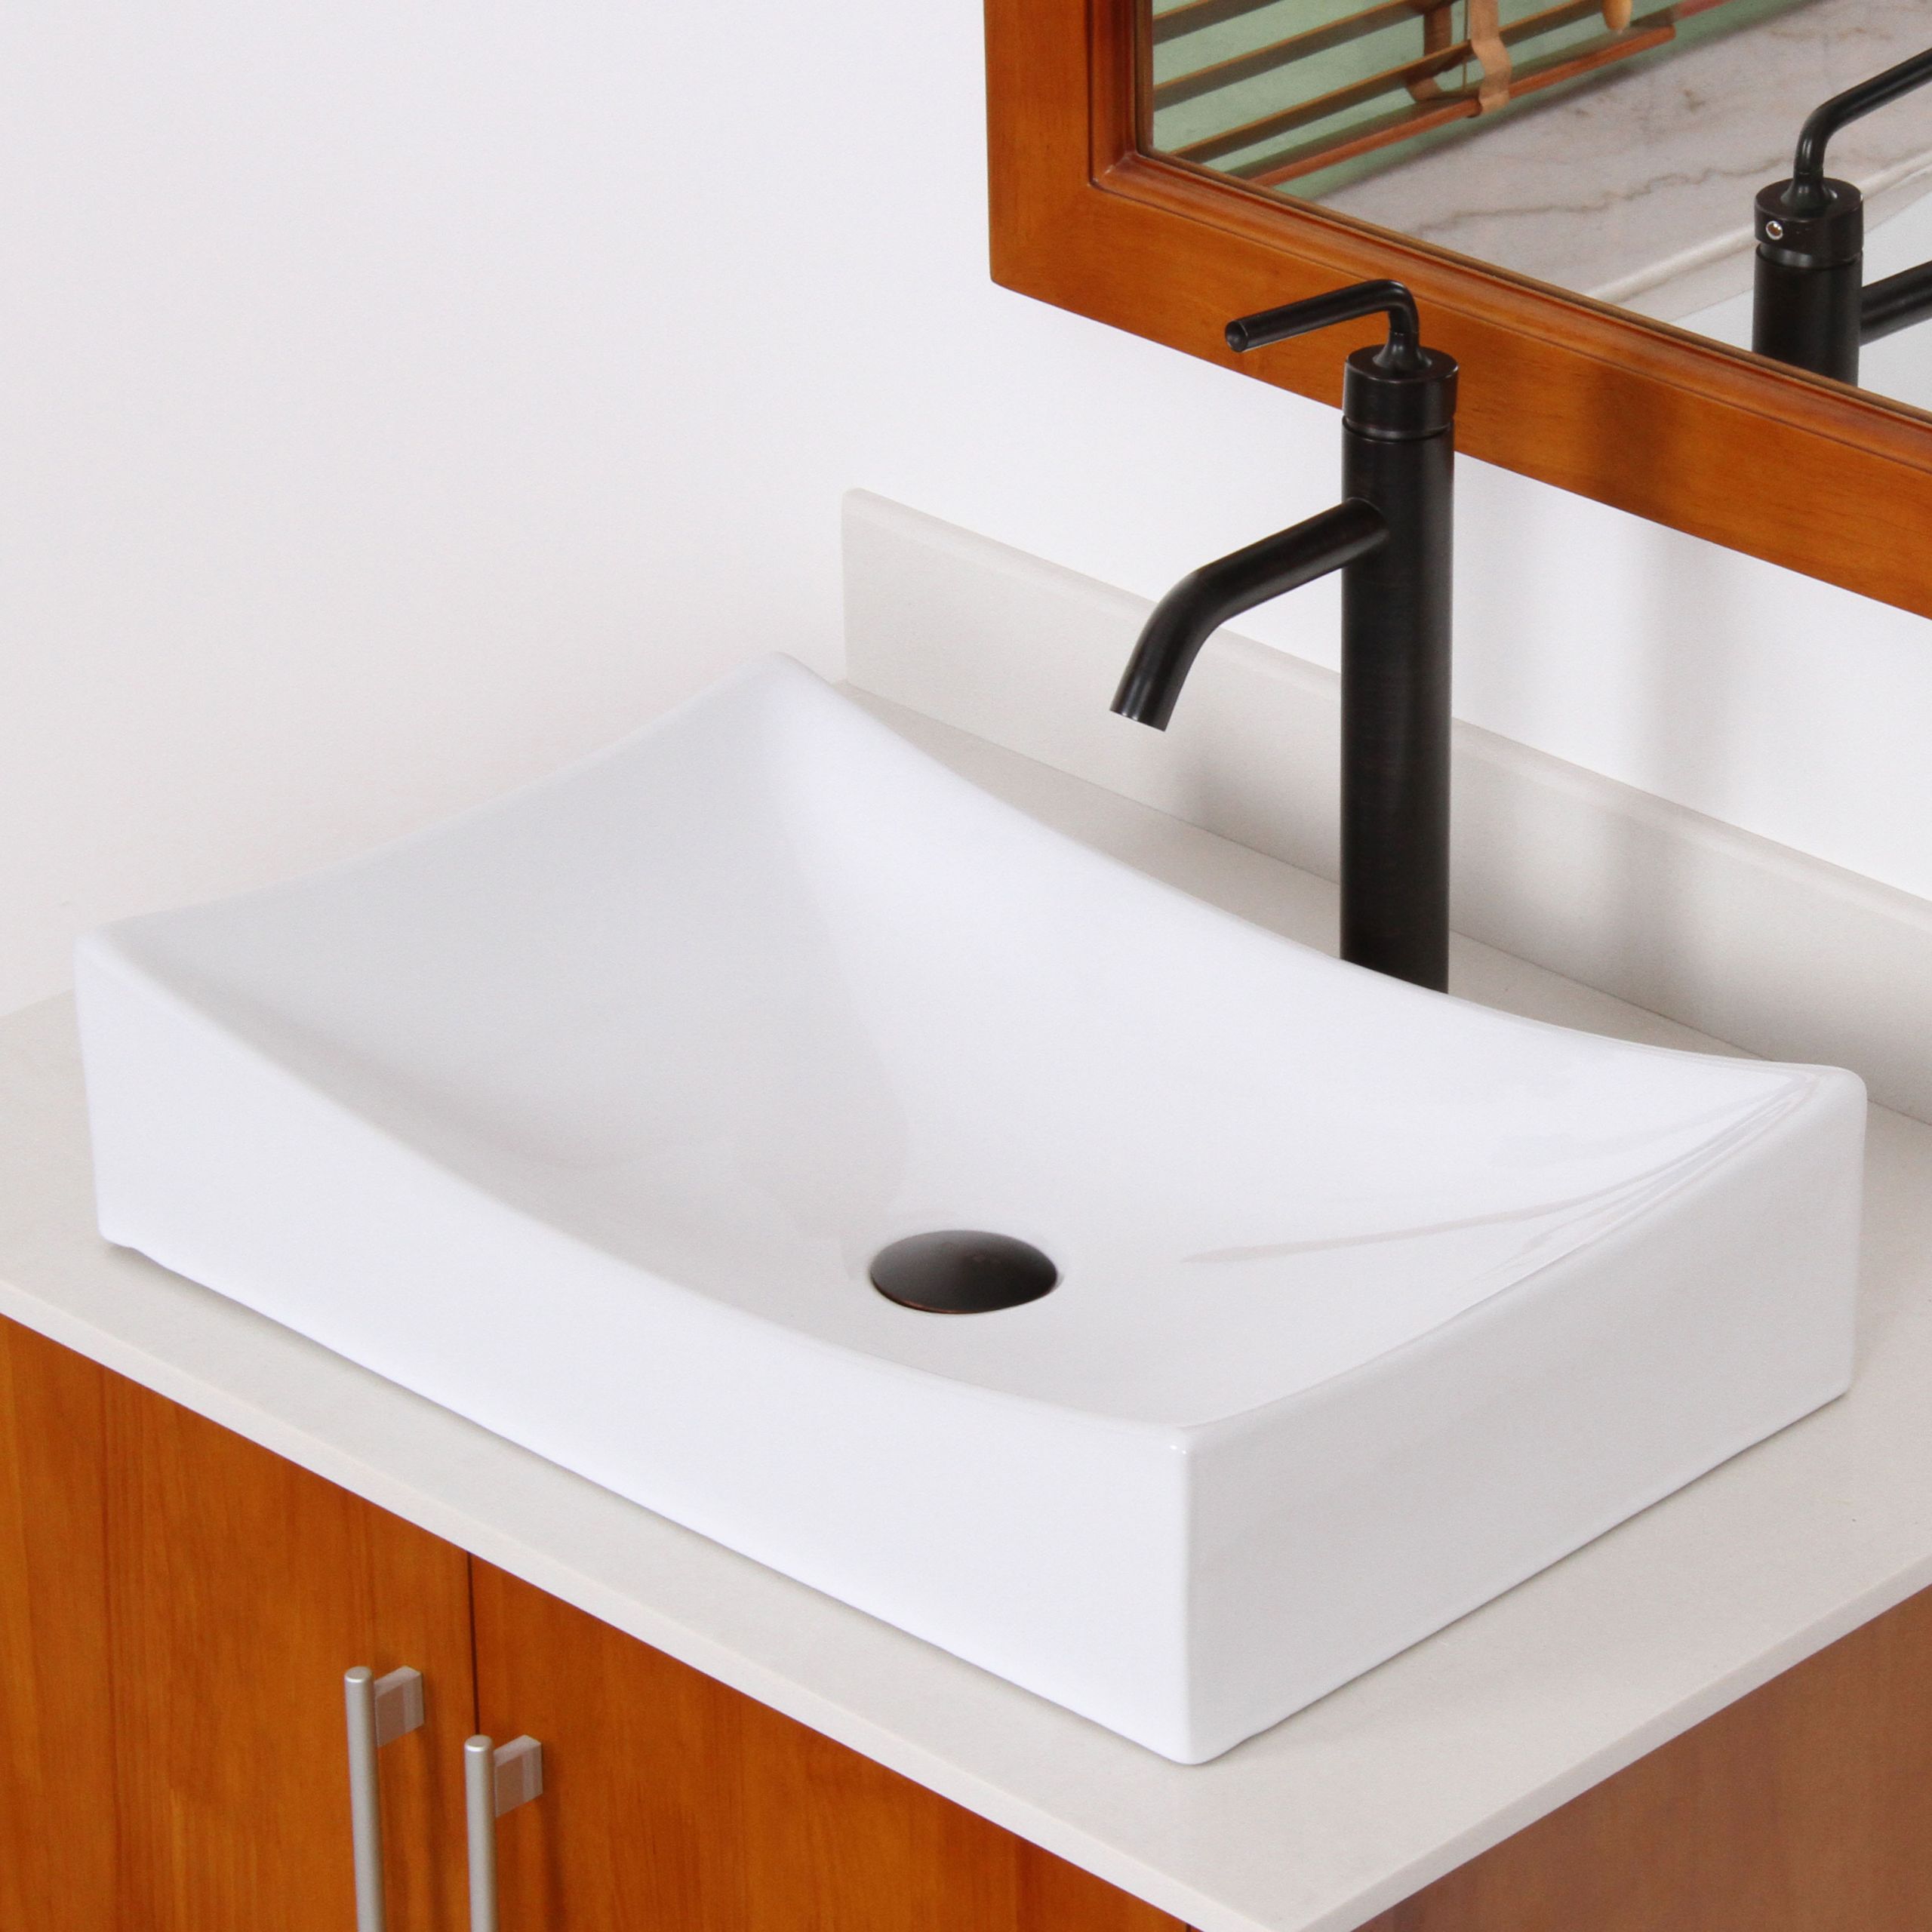 Designer Bathroom Sinks
 Grade A Ceramic Bathroom Sink With Unique Design 9910